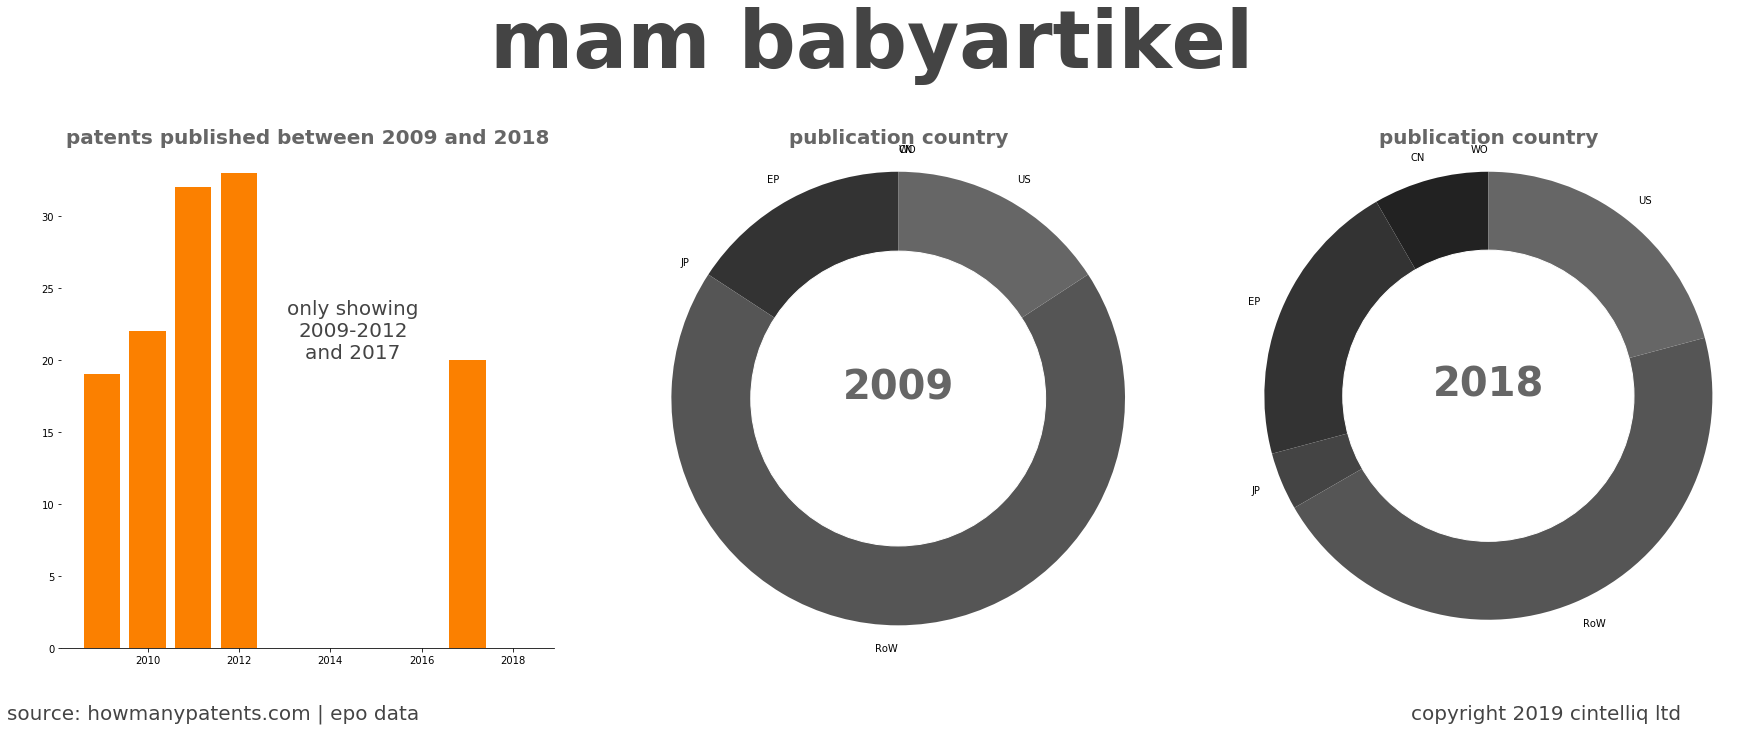 summary of patents for Mam Babyartikel